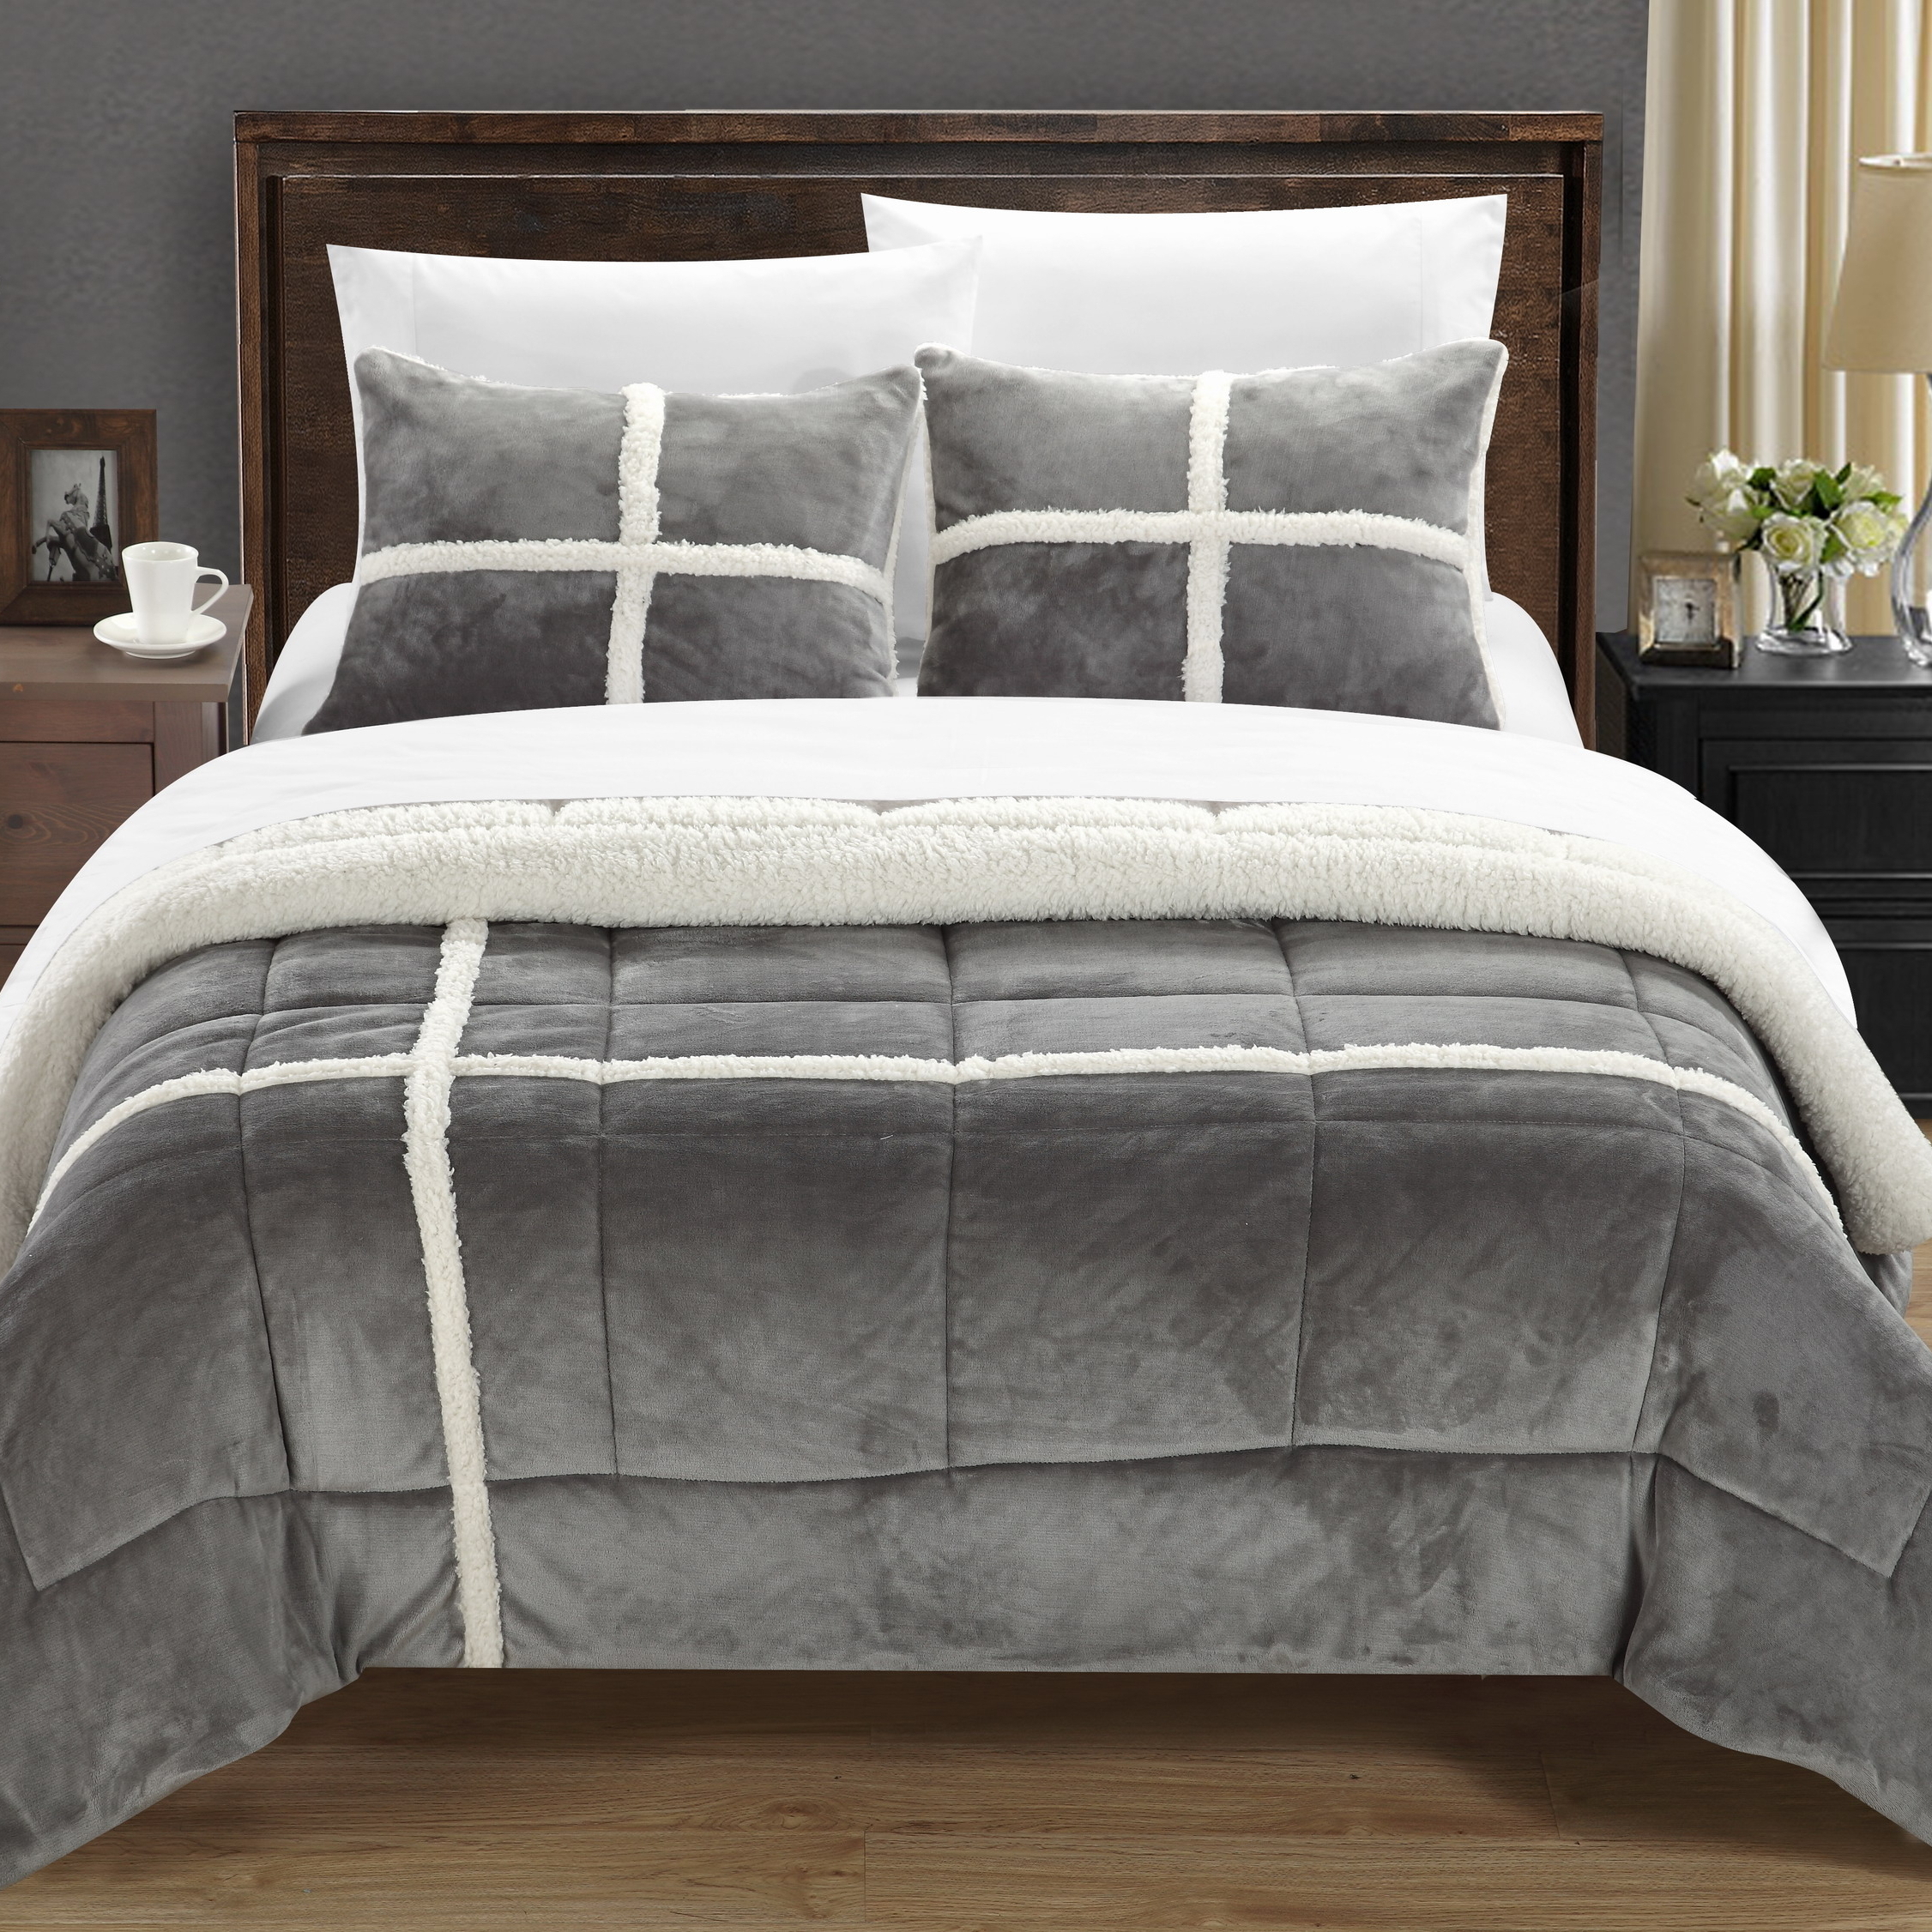 Chloe 3 Or 2 Piece Comforter Set Ultra Plush Micro Mink Sherpa Lined Bedding â Decorative Pillow Shams Included - Silver, King - 3 Piece